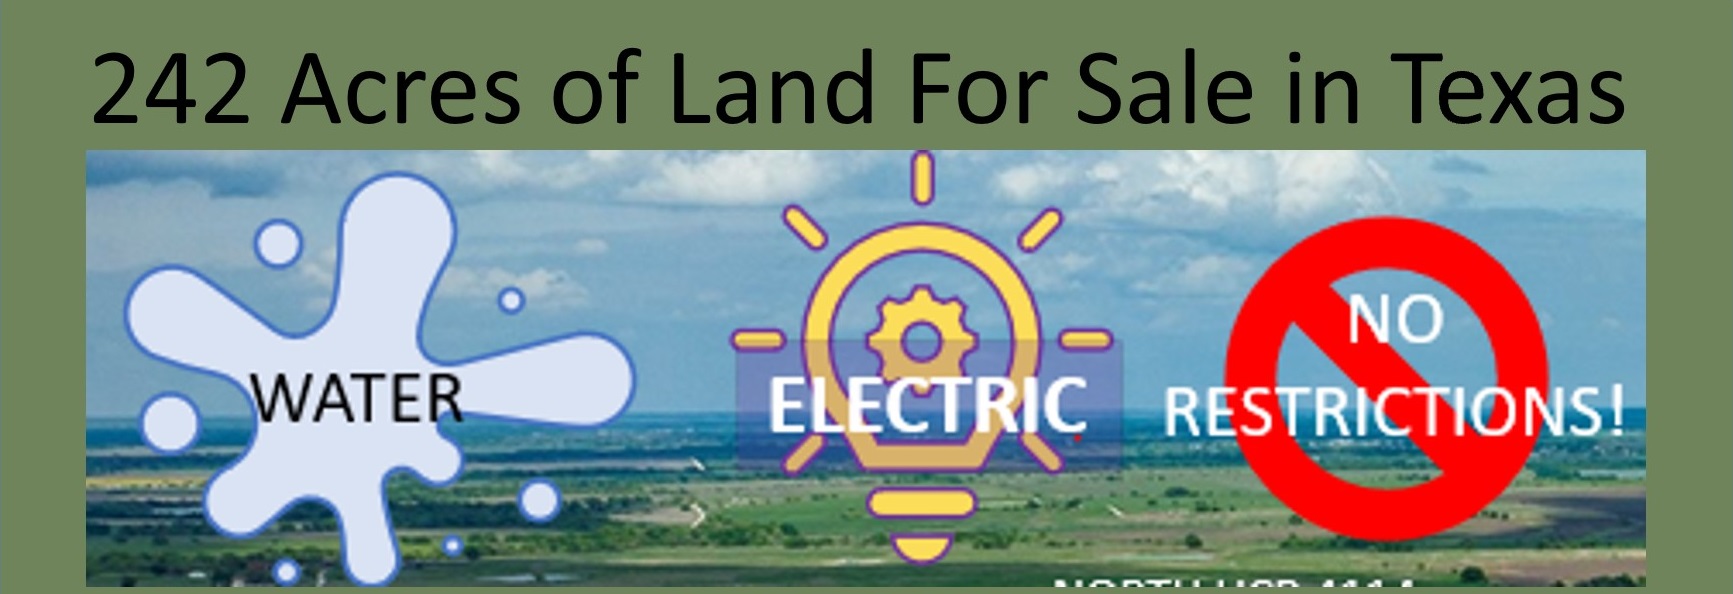 Texas Development Land For Sale